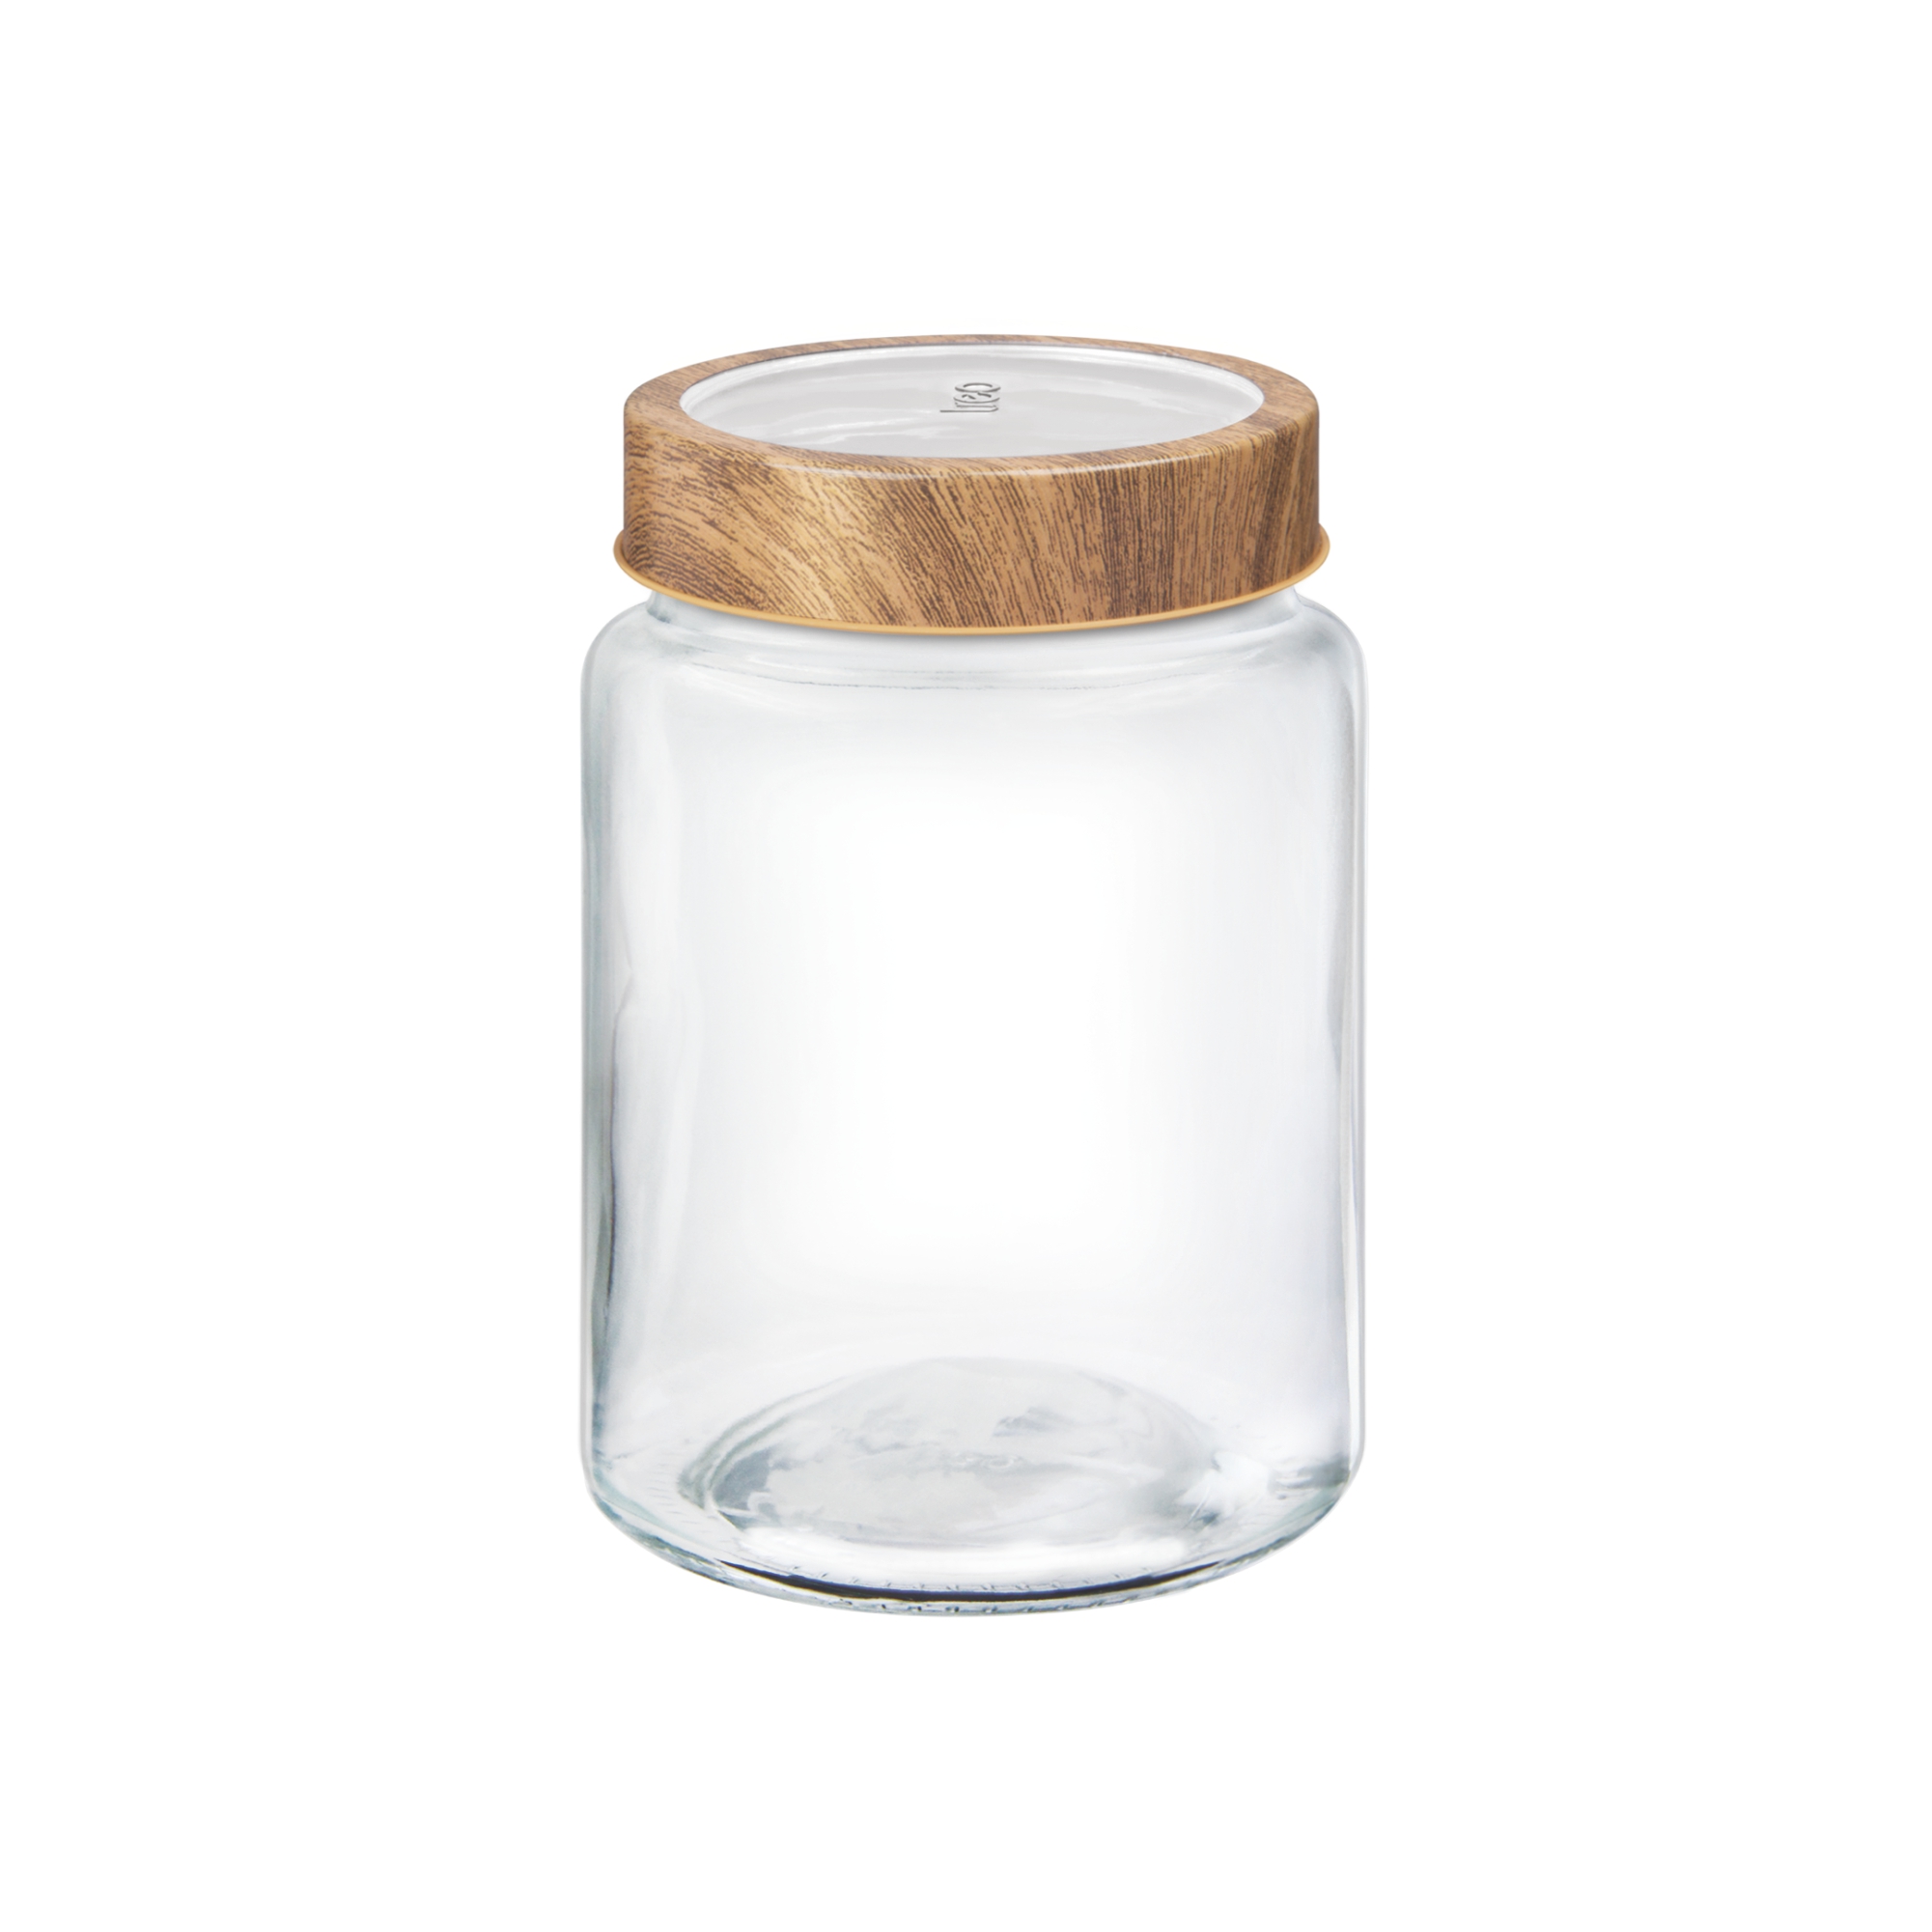 Treo Woody Radius Glass Jar